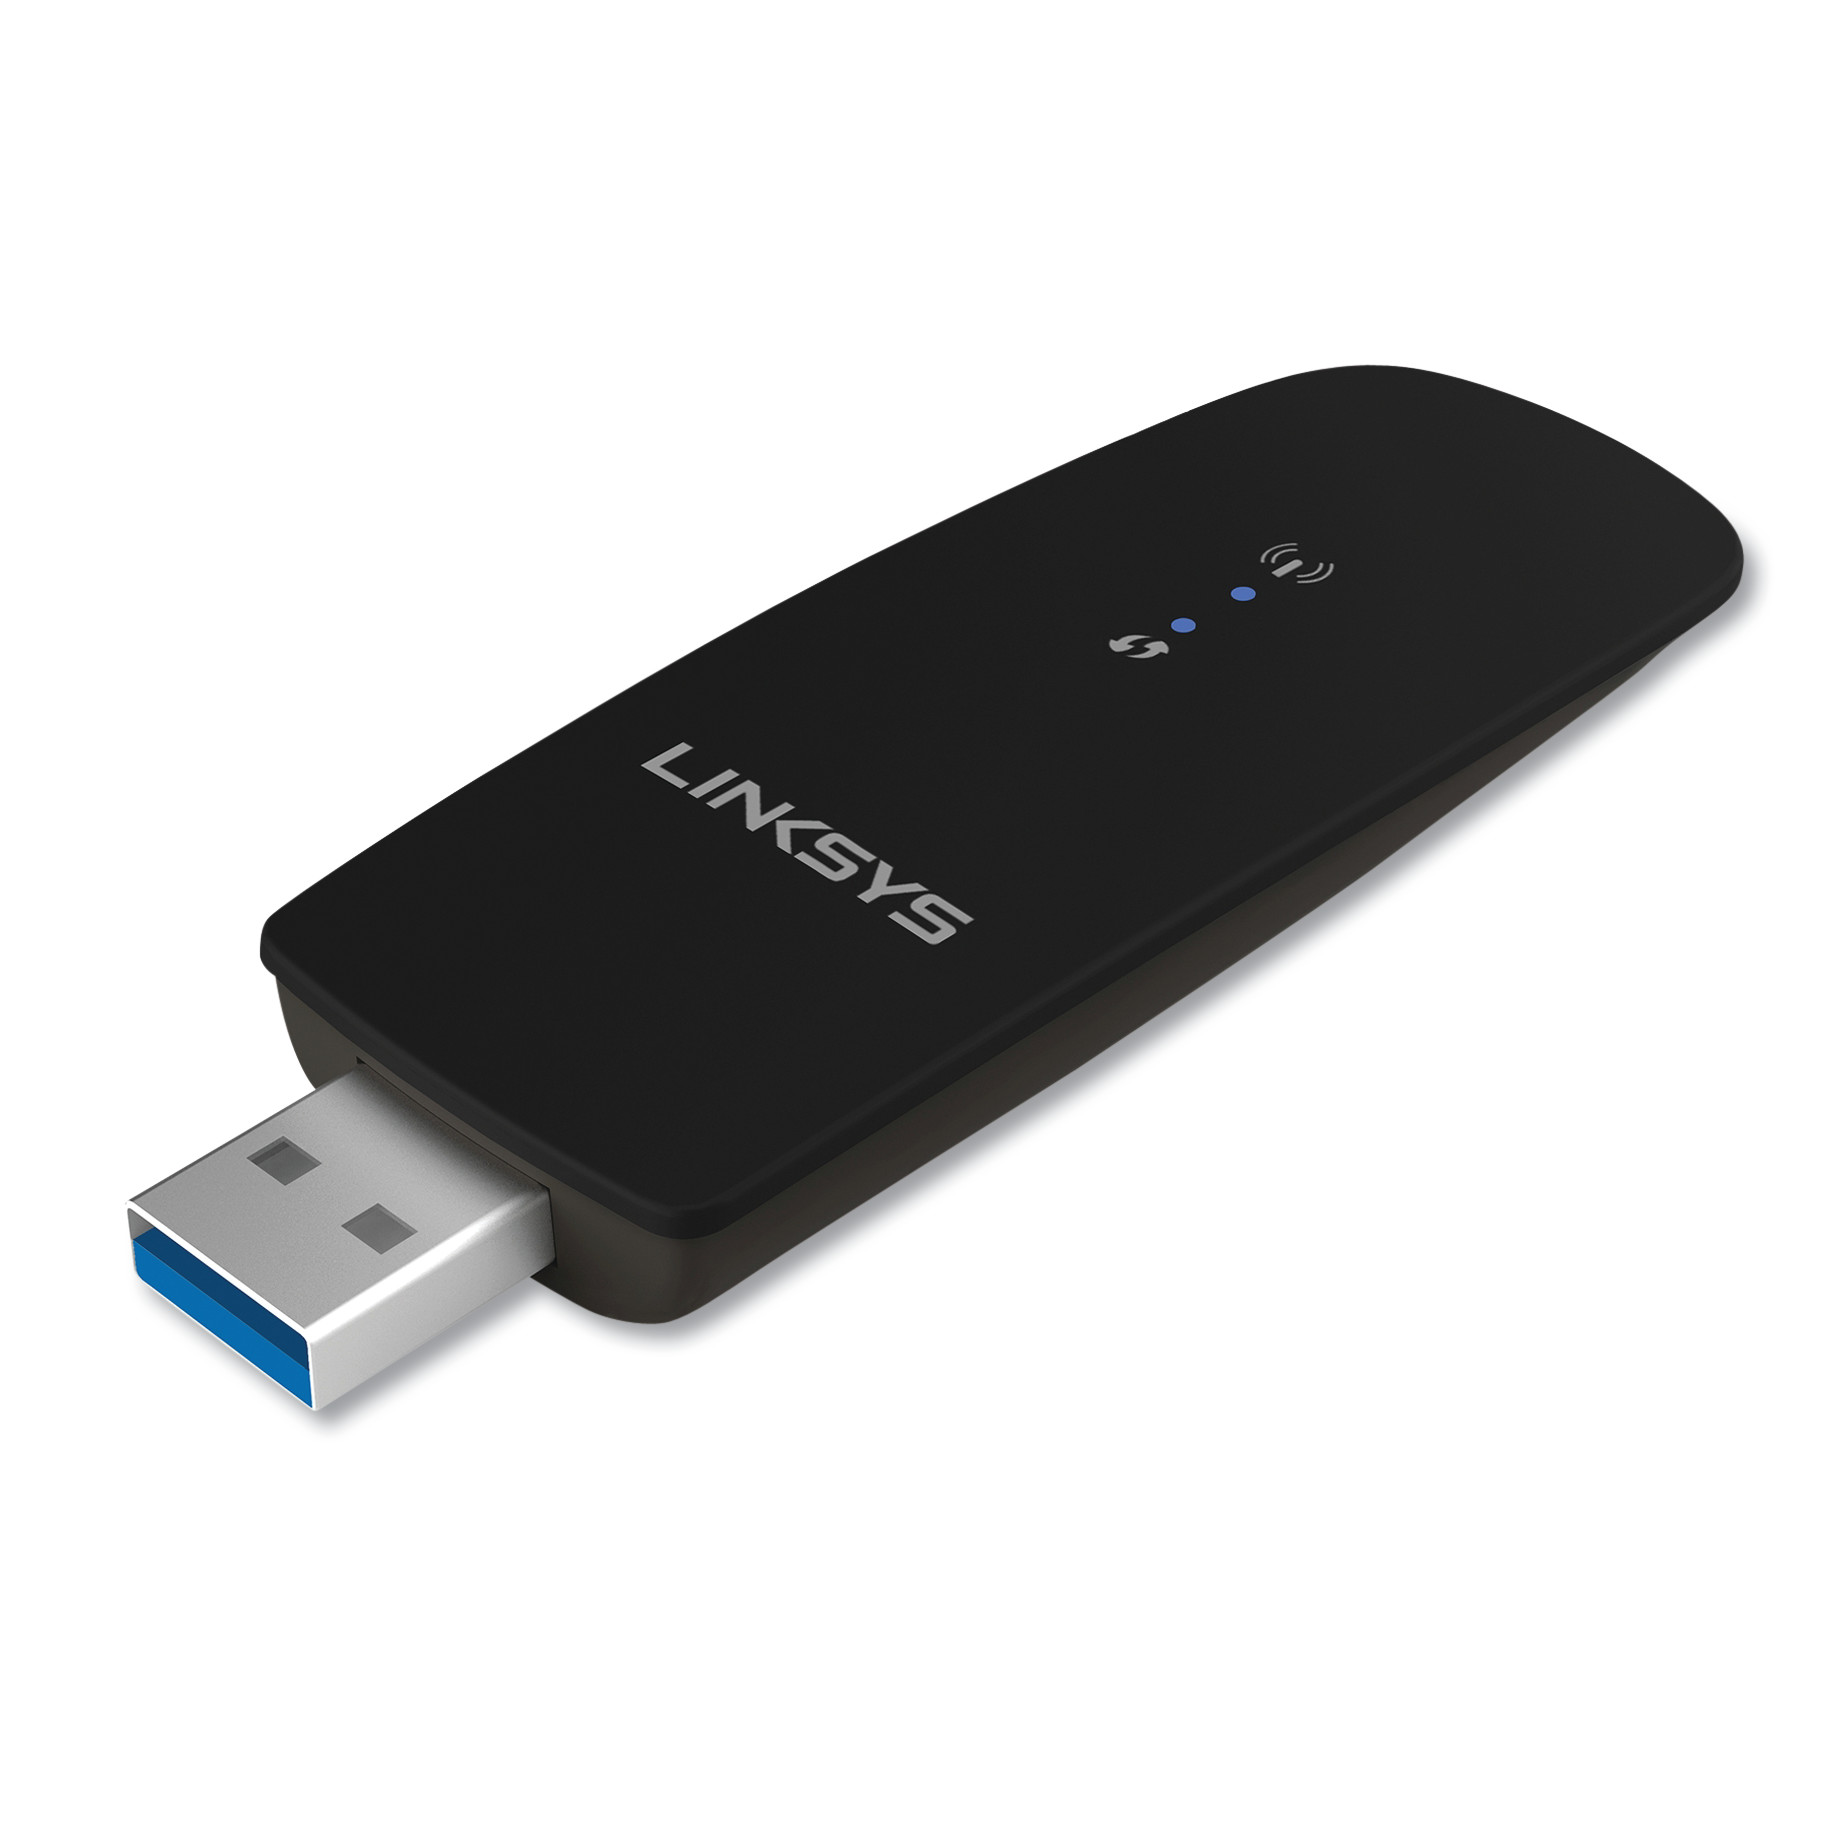  LINKSYS WUSB6300 USB Adapter, Black (LNKWUSB6300) 